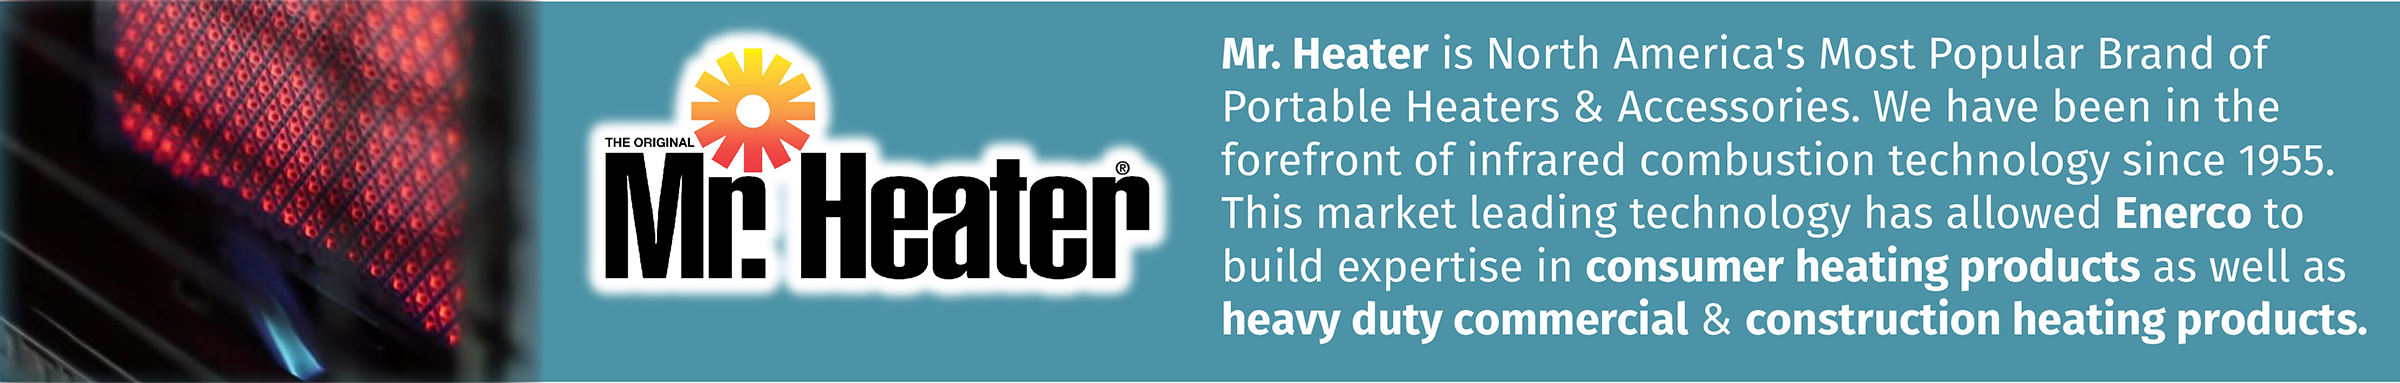 Mr. Heater